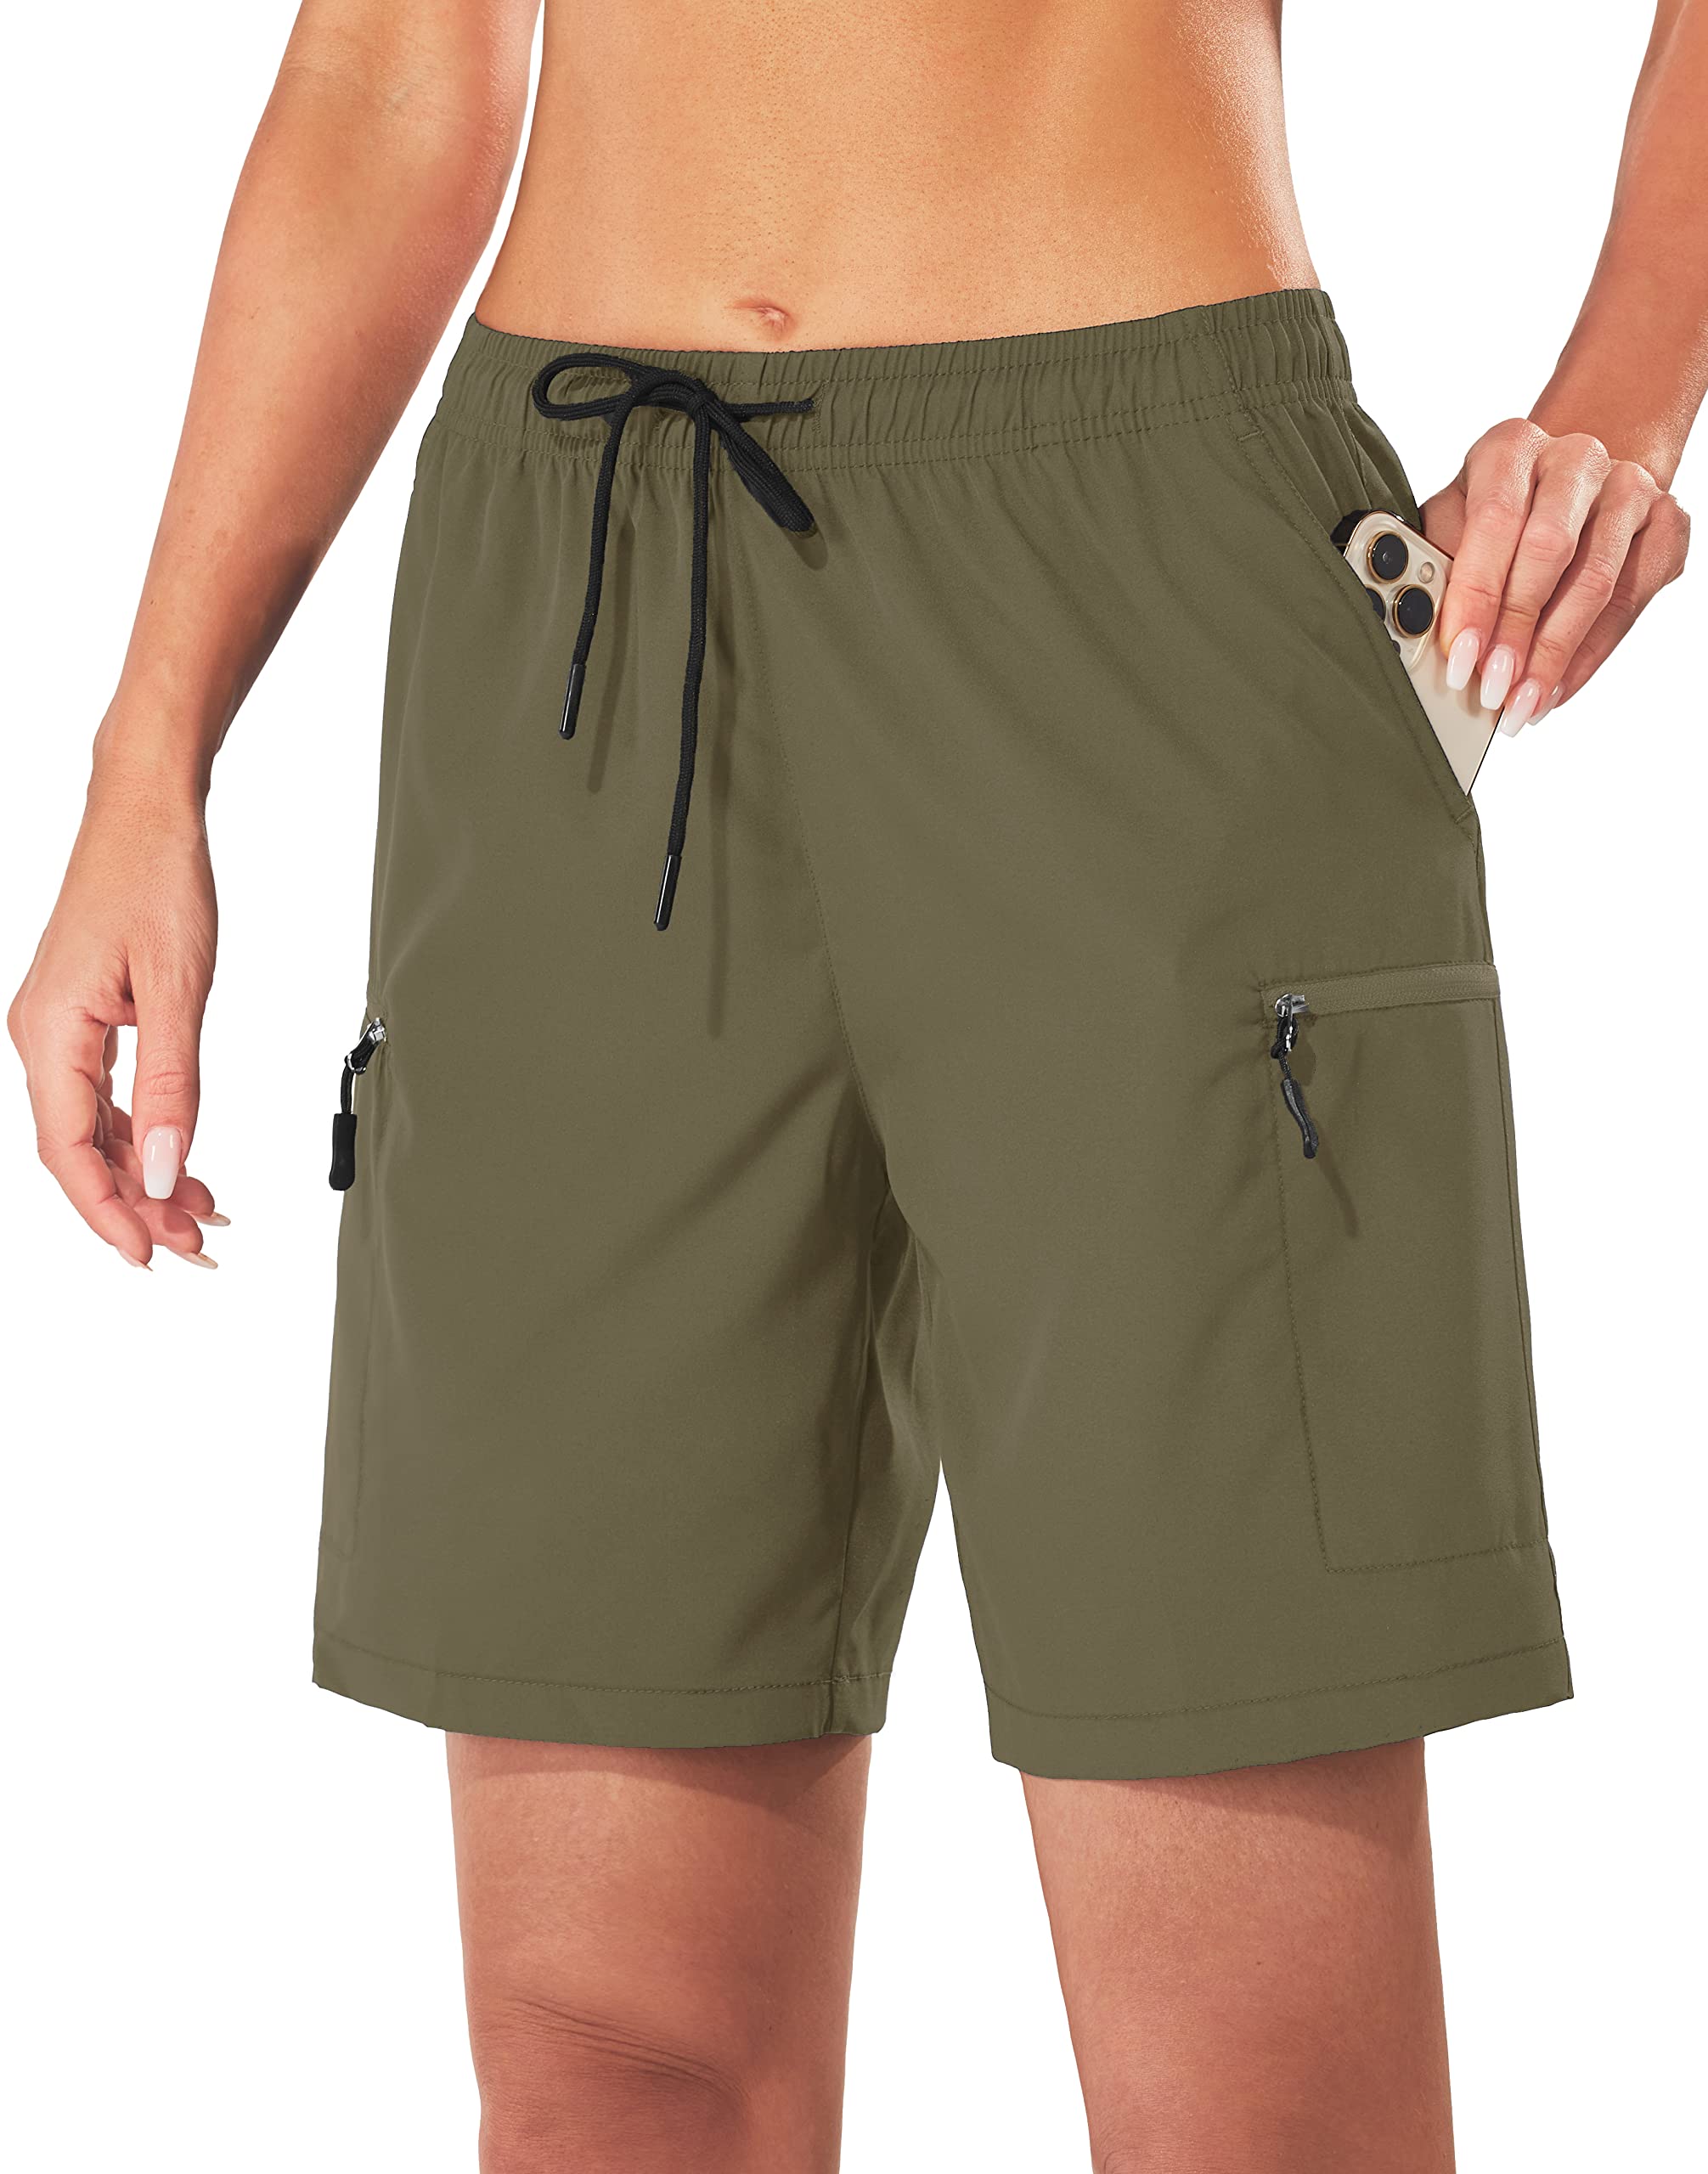 Looleafy Women's Hiking Cargo Shorts